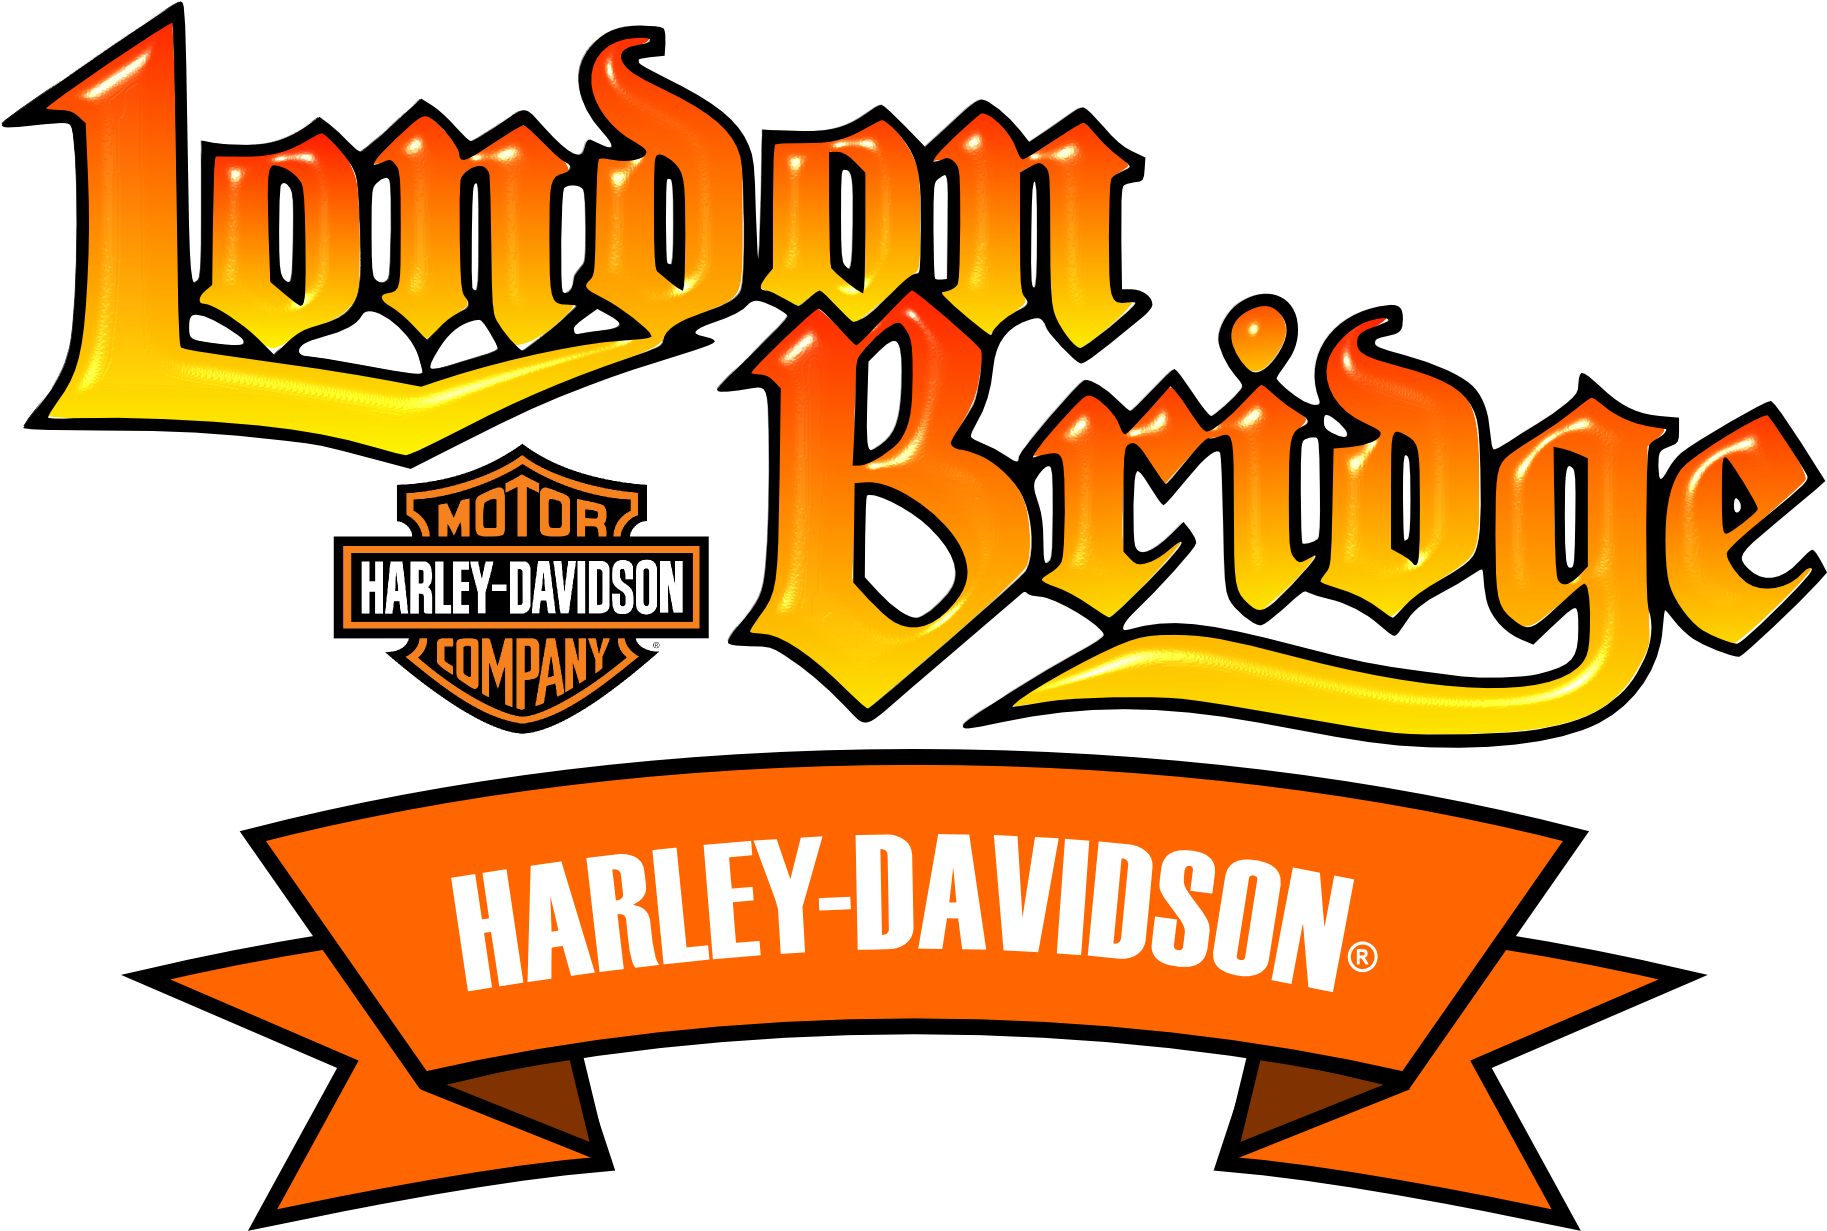 London Bridge Harley Davidson Store Logo Steal Able - 2018 Events Lake Havasu (2187x1304)